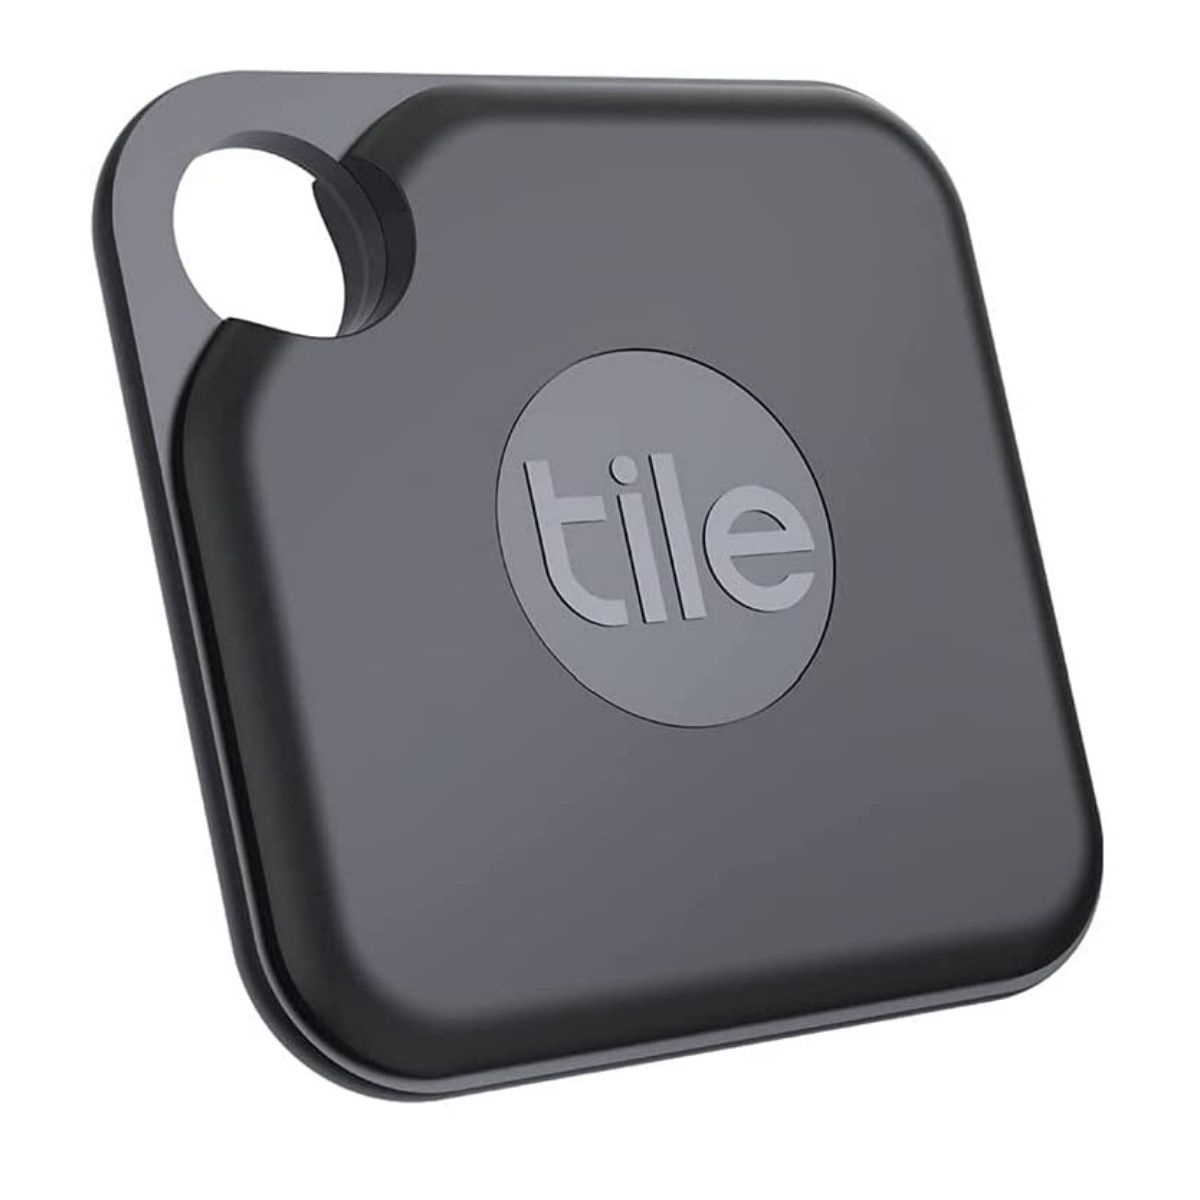 Tile Pro High Performance Bluetooth Tracker